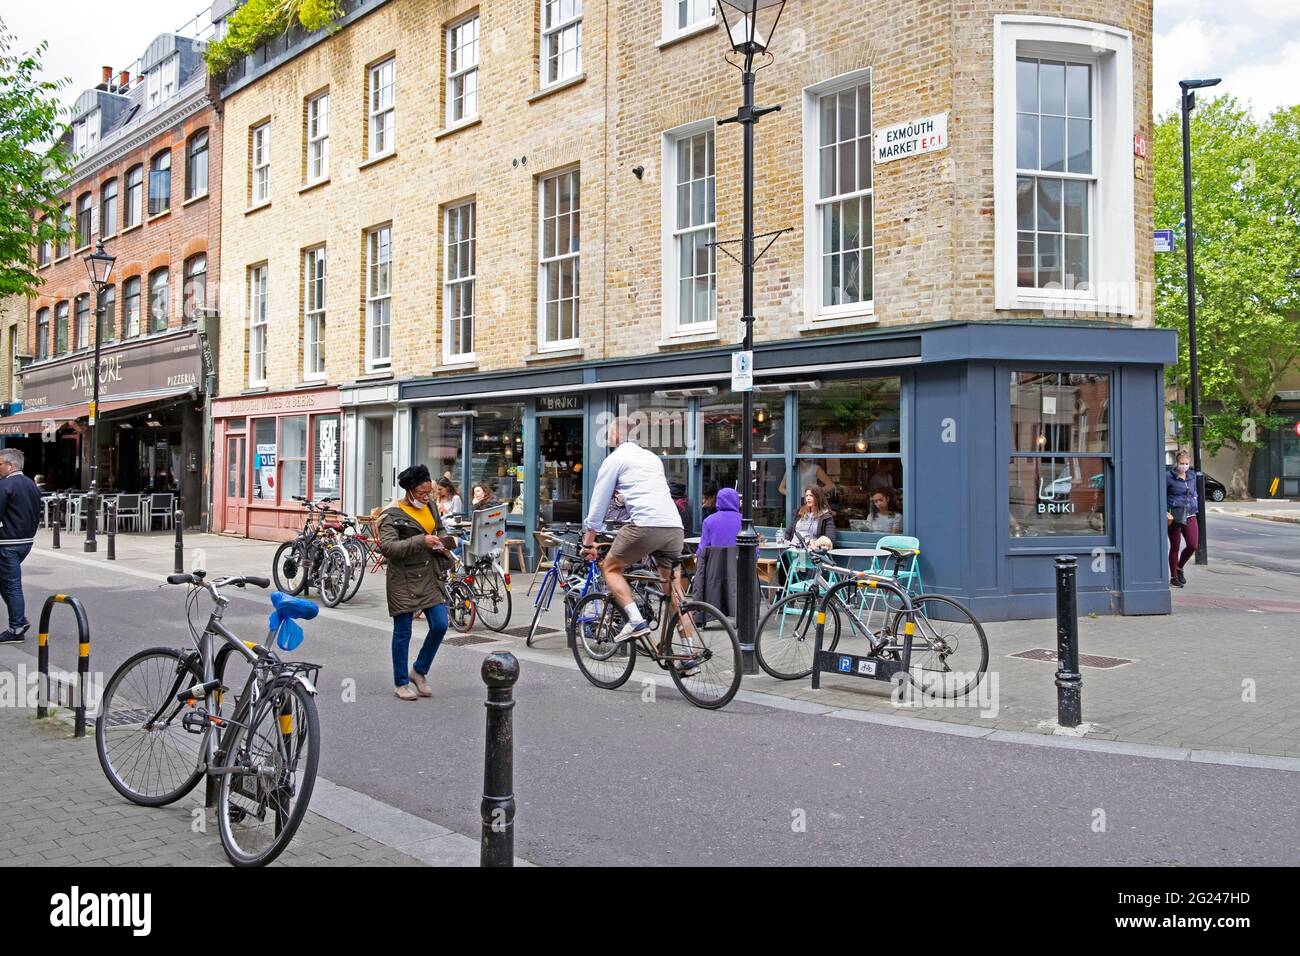 People cycling walking outside Briki restaurant & Exmouth Market street sign on building in Clerkenwell Islington London EC1 England UK  KATHY DEWITT Stock Photo